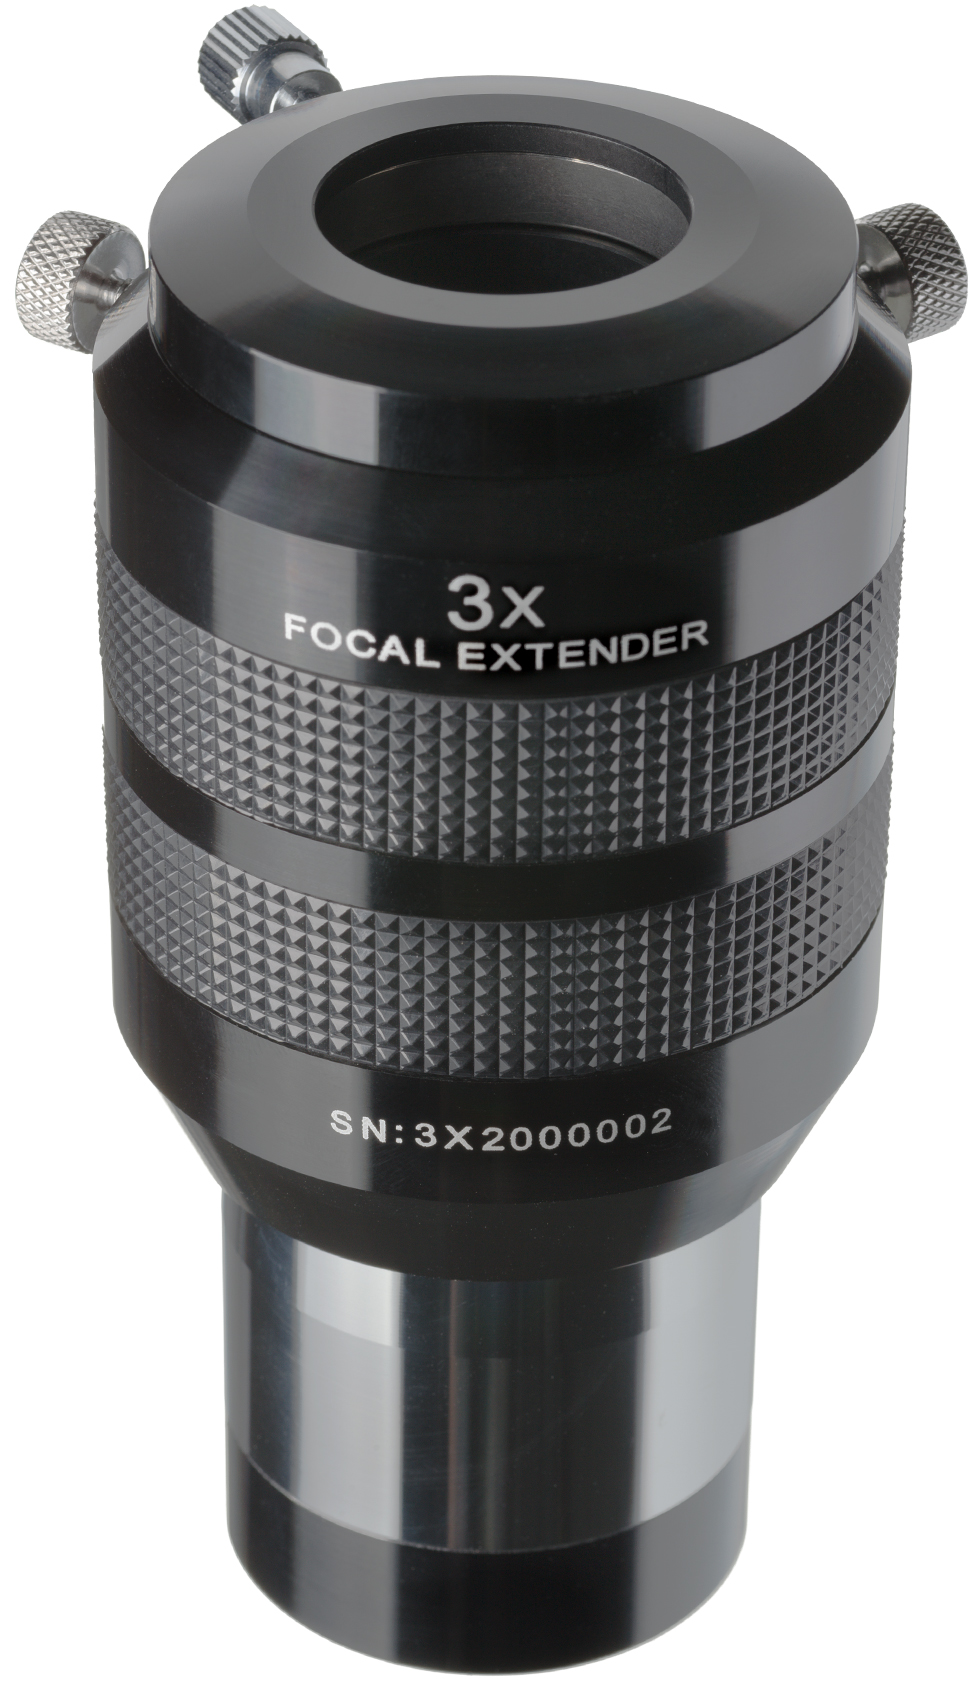 EXPLORE SCIENTIFIC Fokal Extender 3x 50,8mm/2"